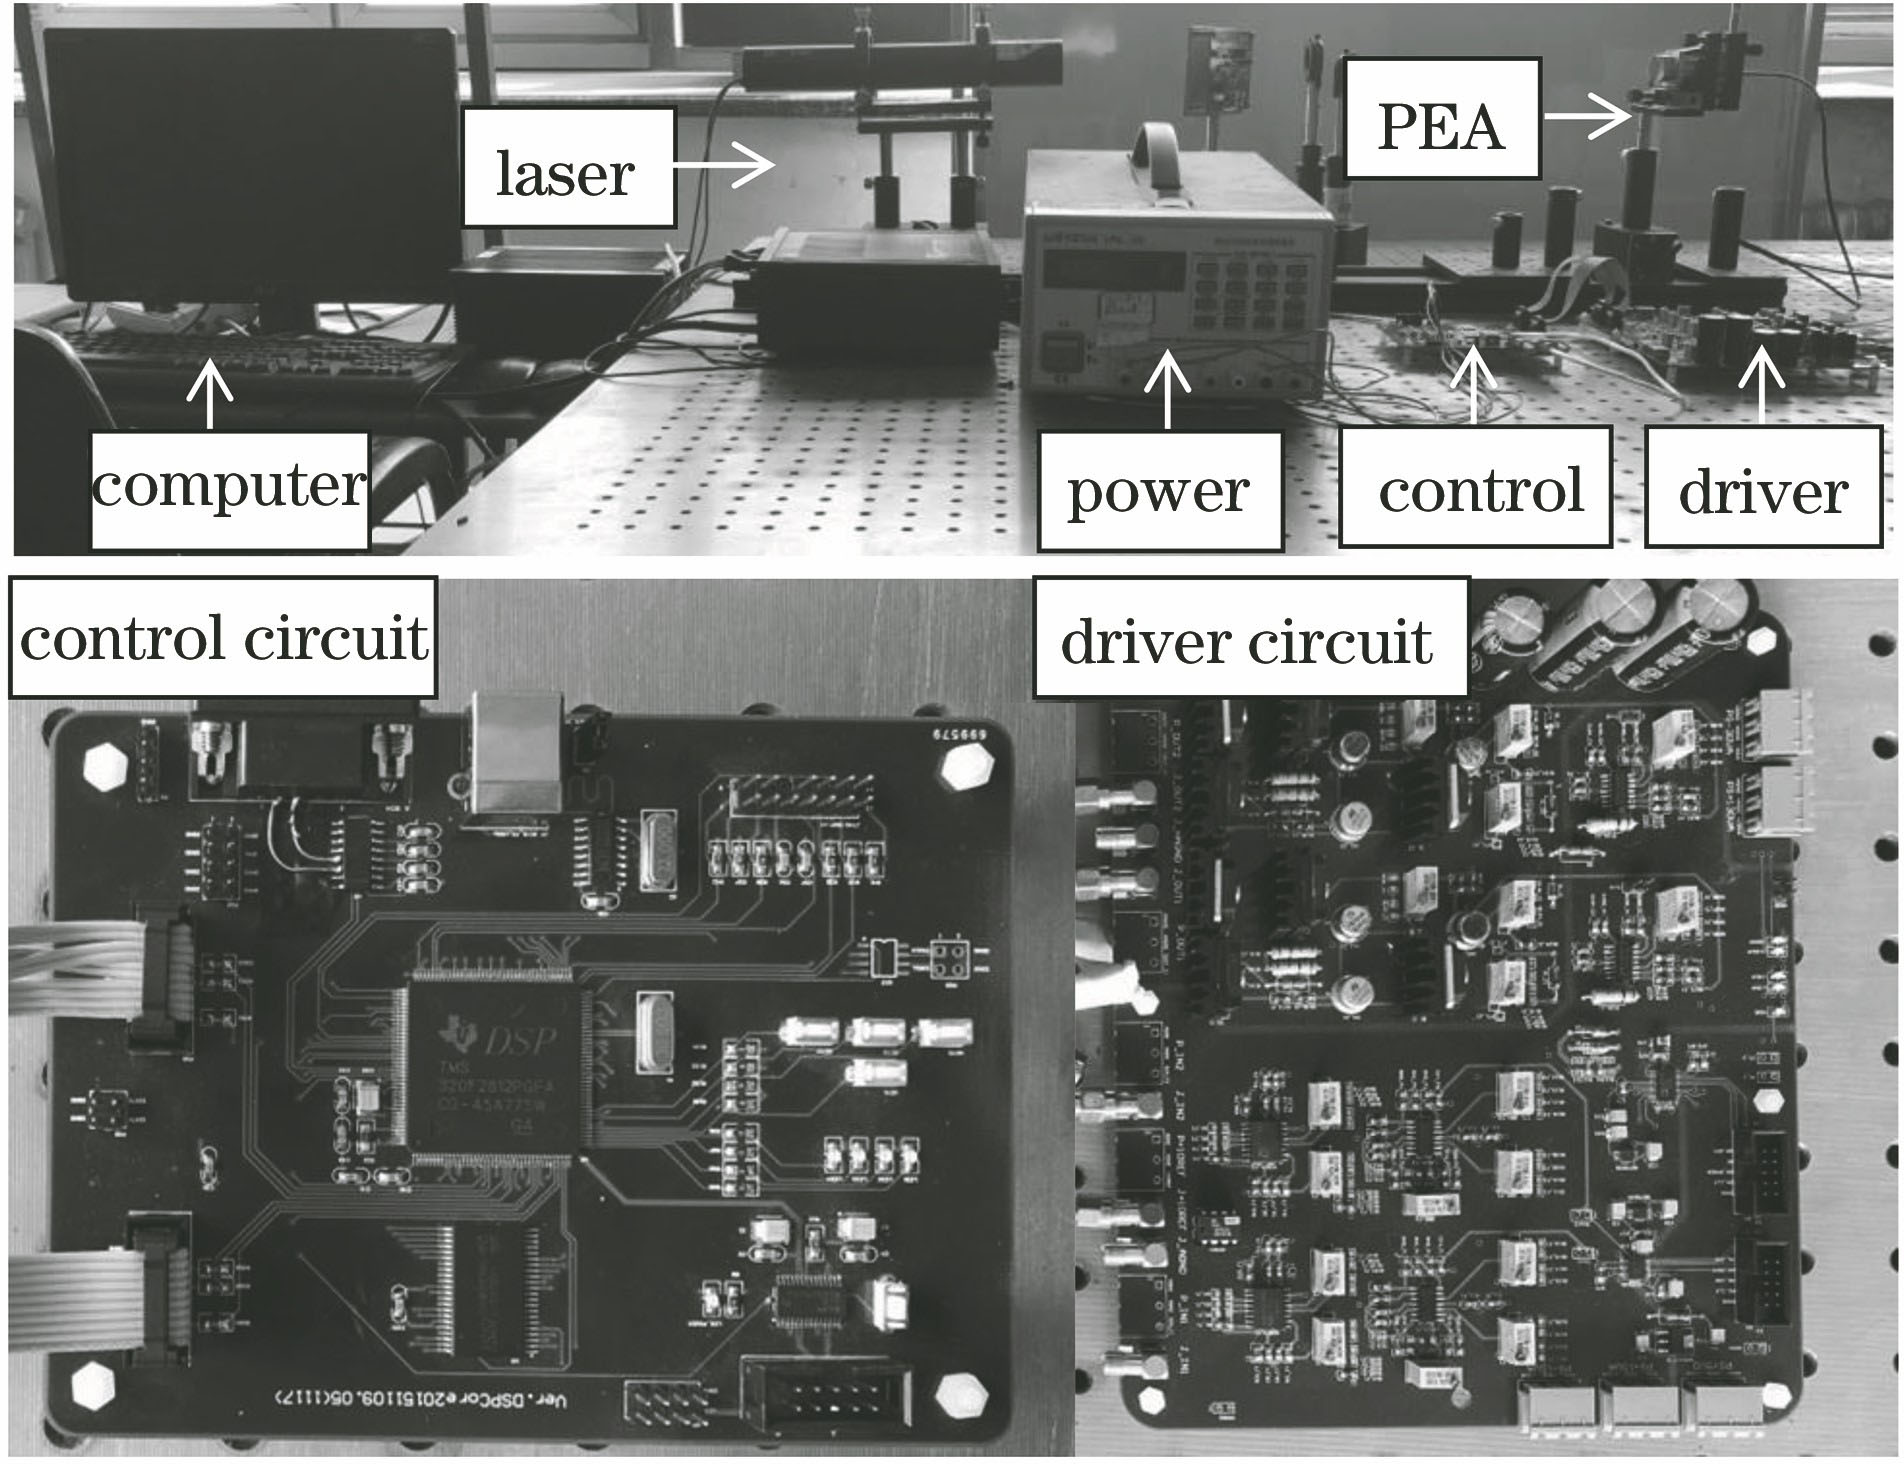 PEA experiment control system